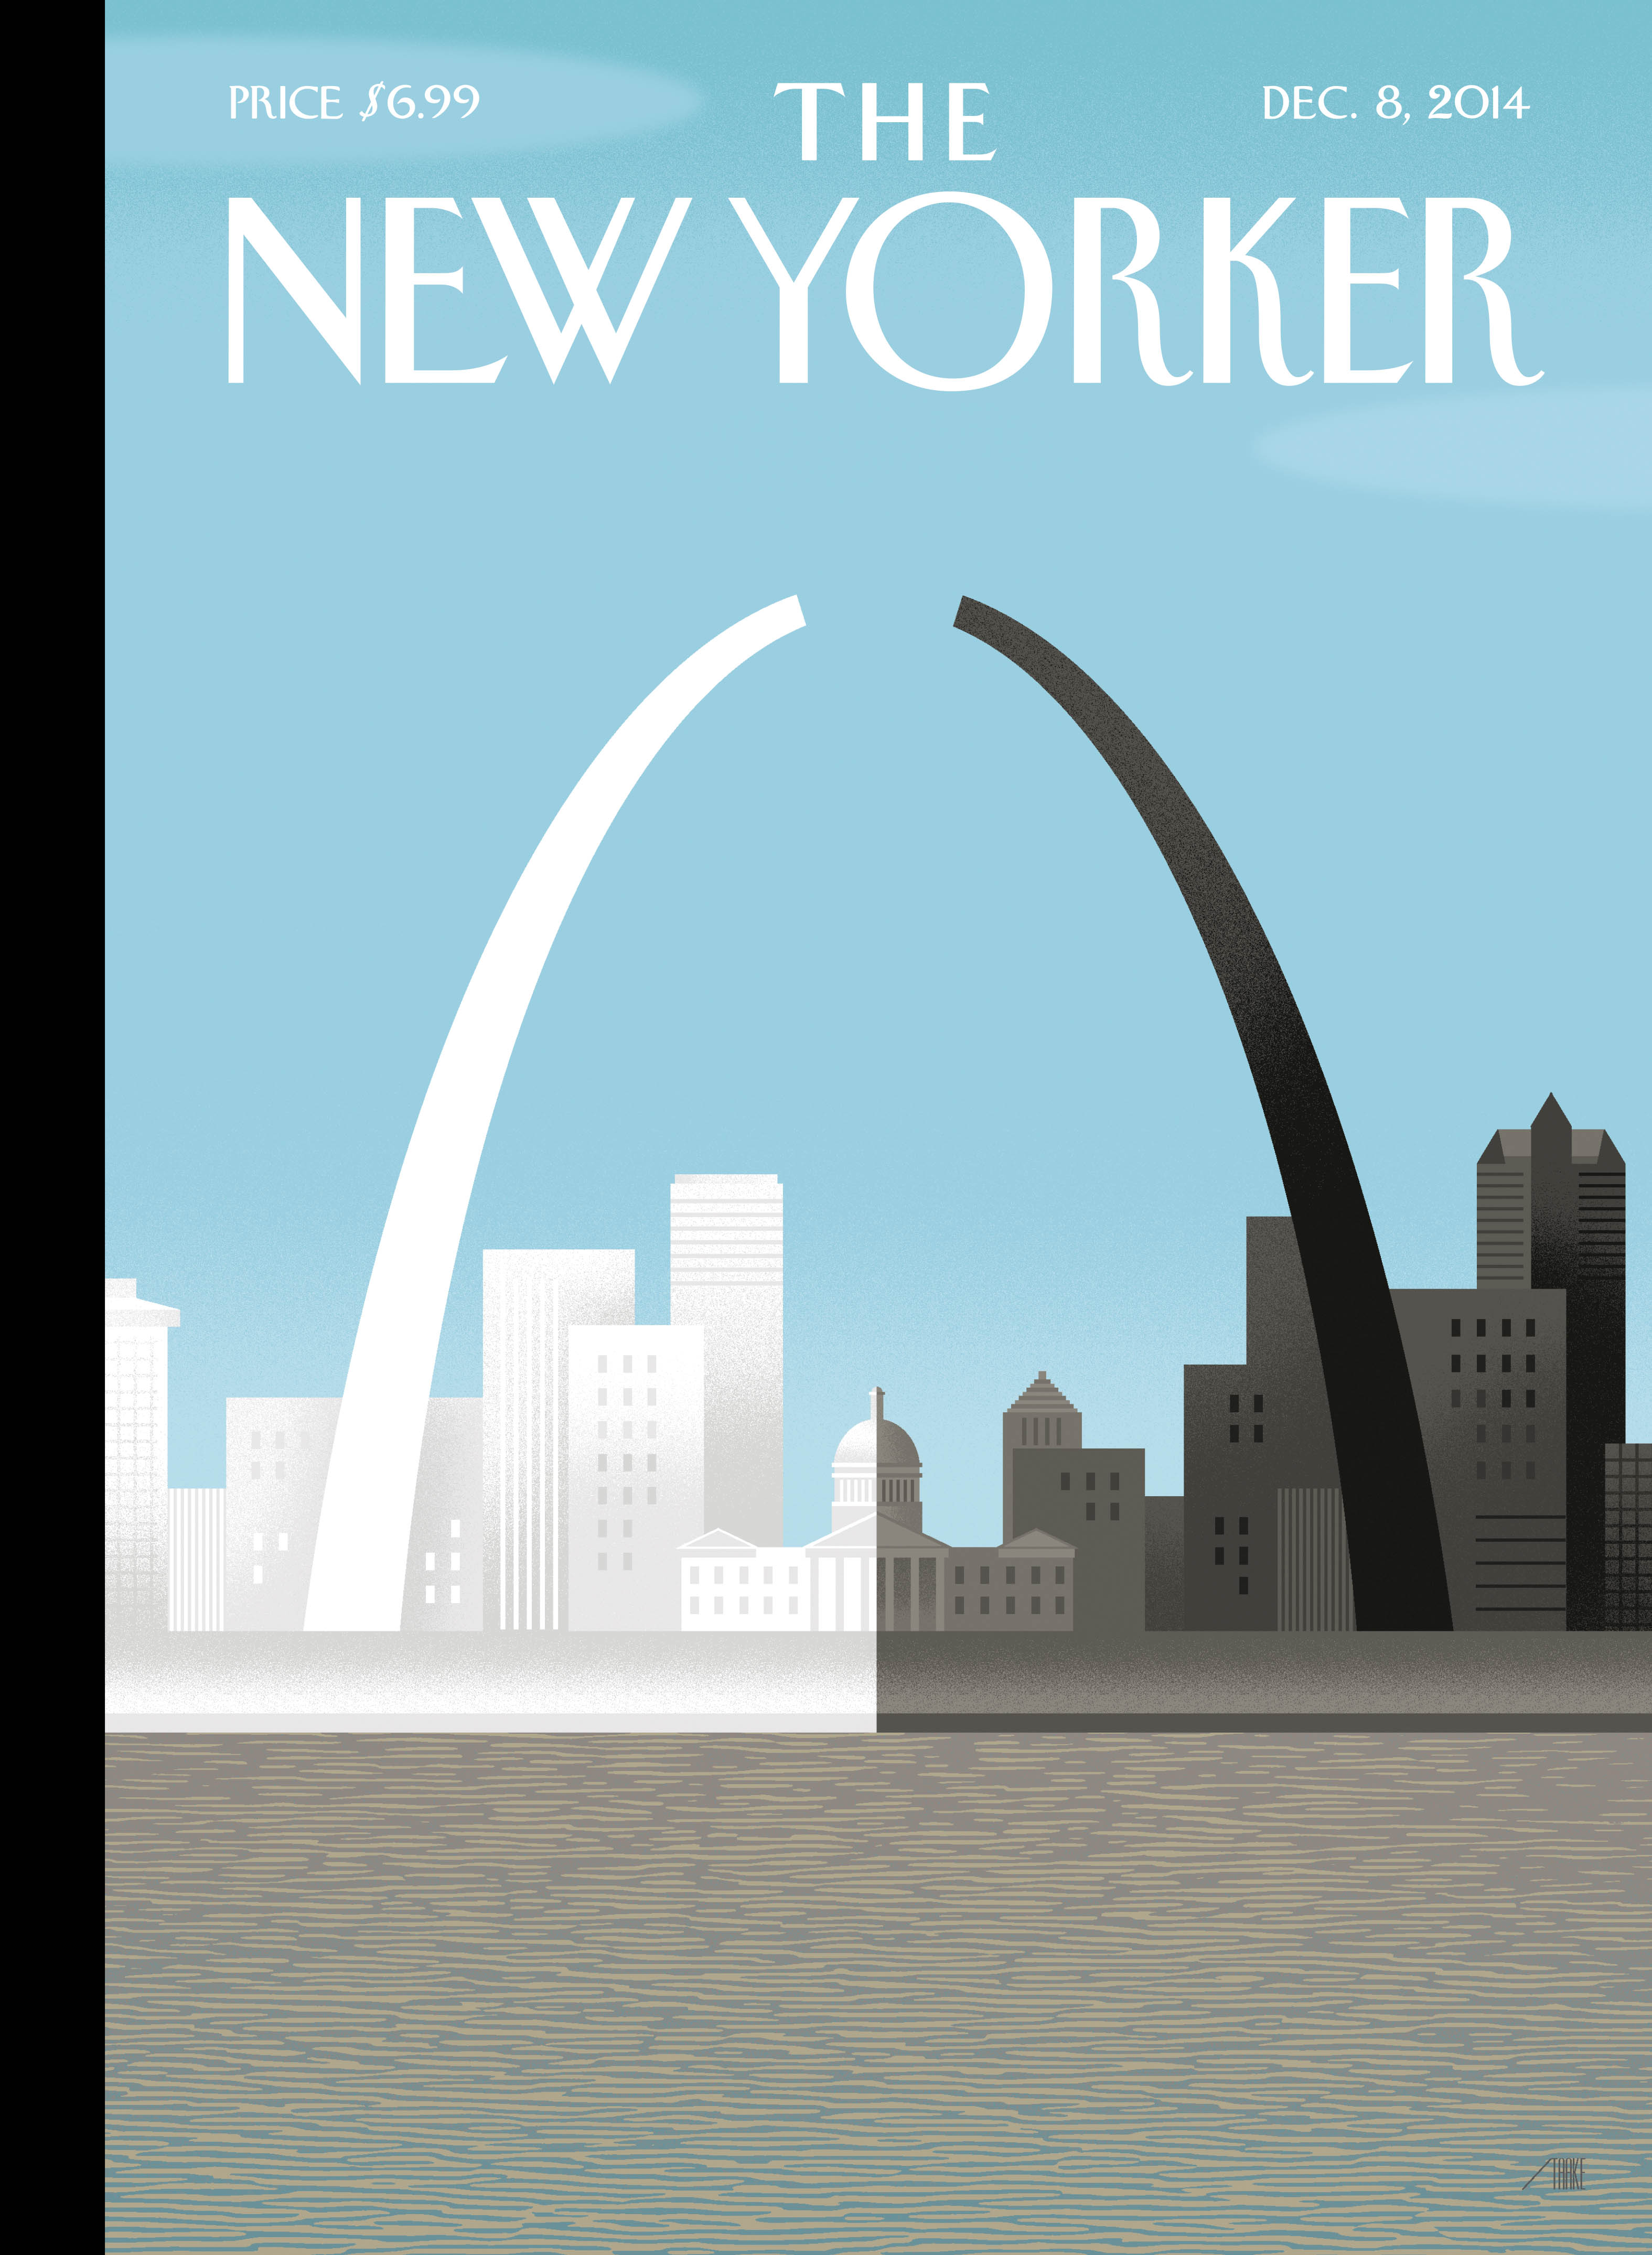 The New Yorker - December 8, 2014, "Broken Arch"